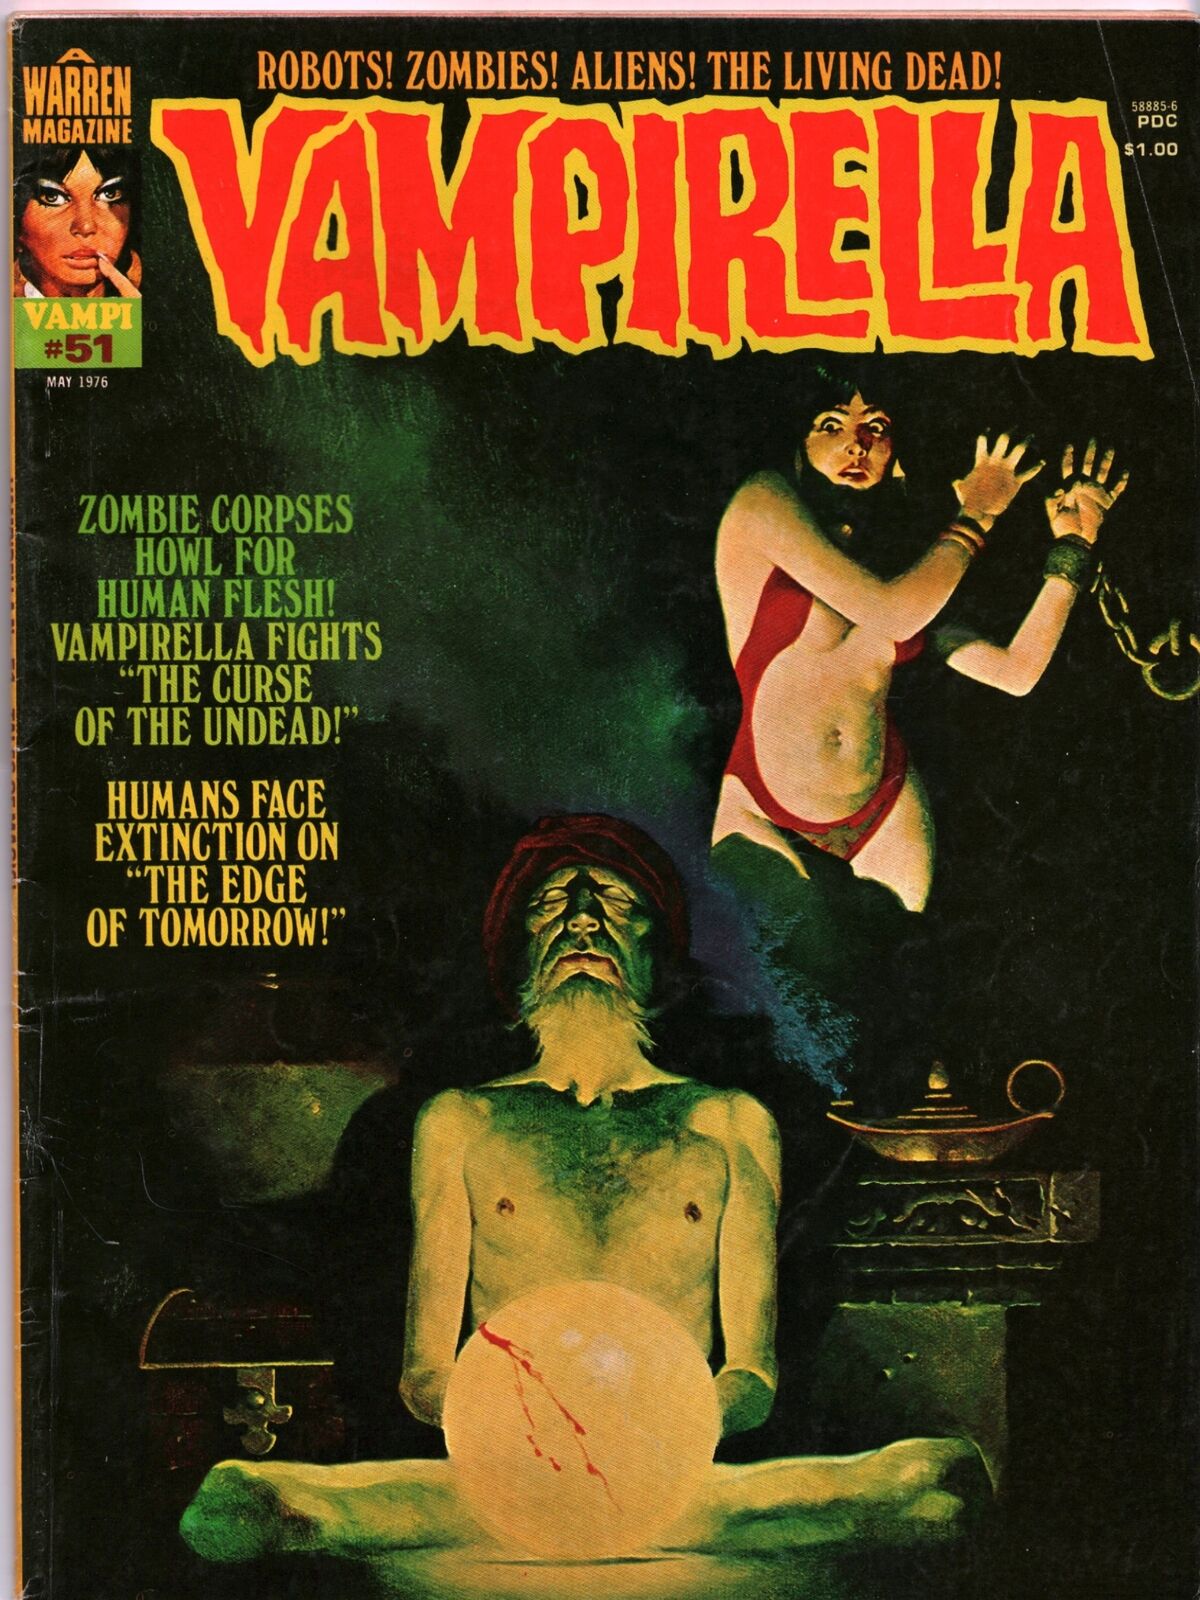 Vampirella #51 May 1976 Comic Book Warren Publishing